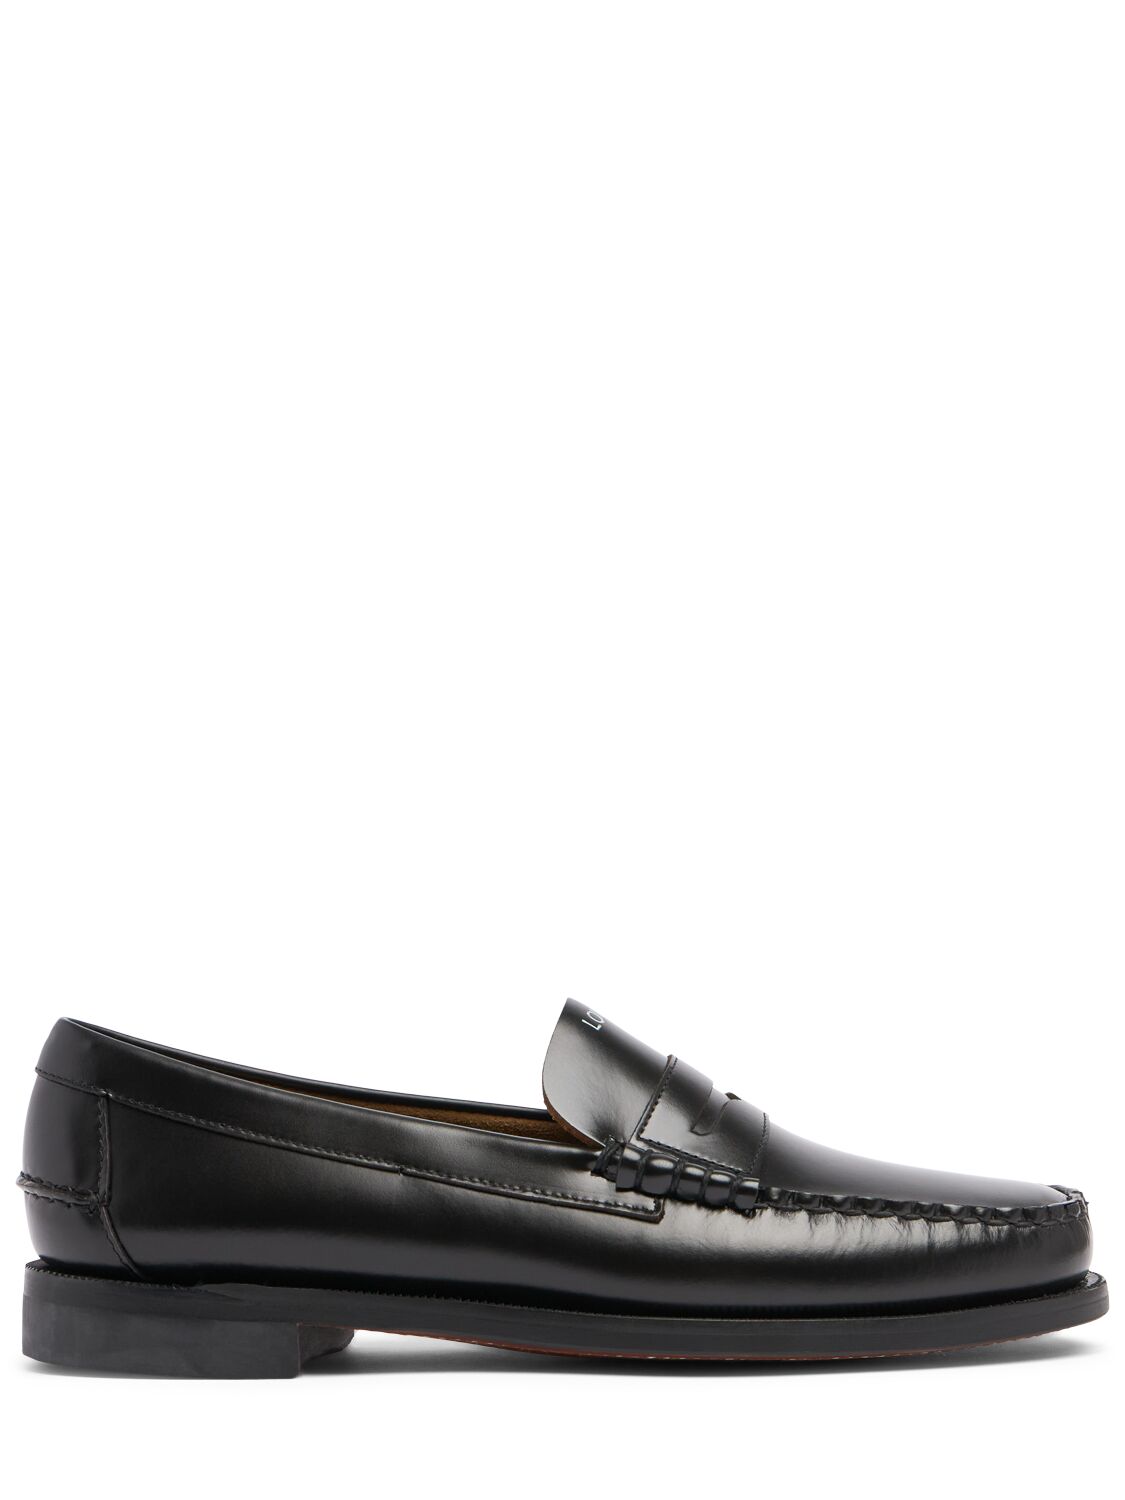 Sebago Dan Love/hate Smooth Leather Loafers In Black